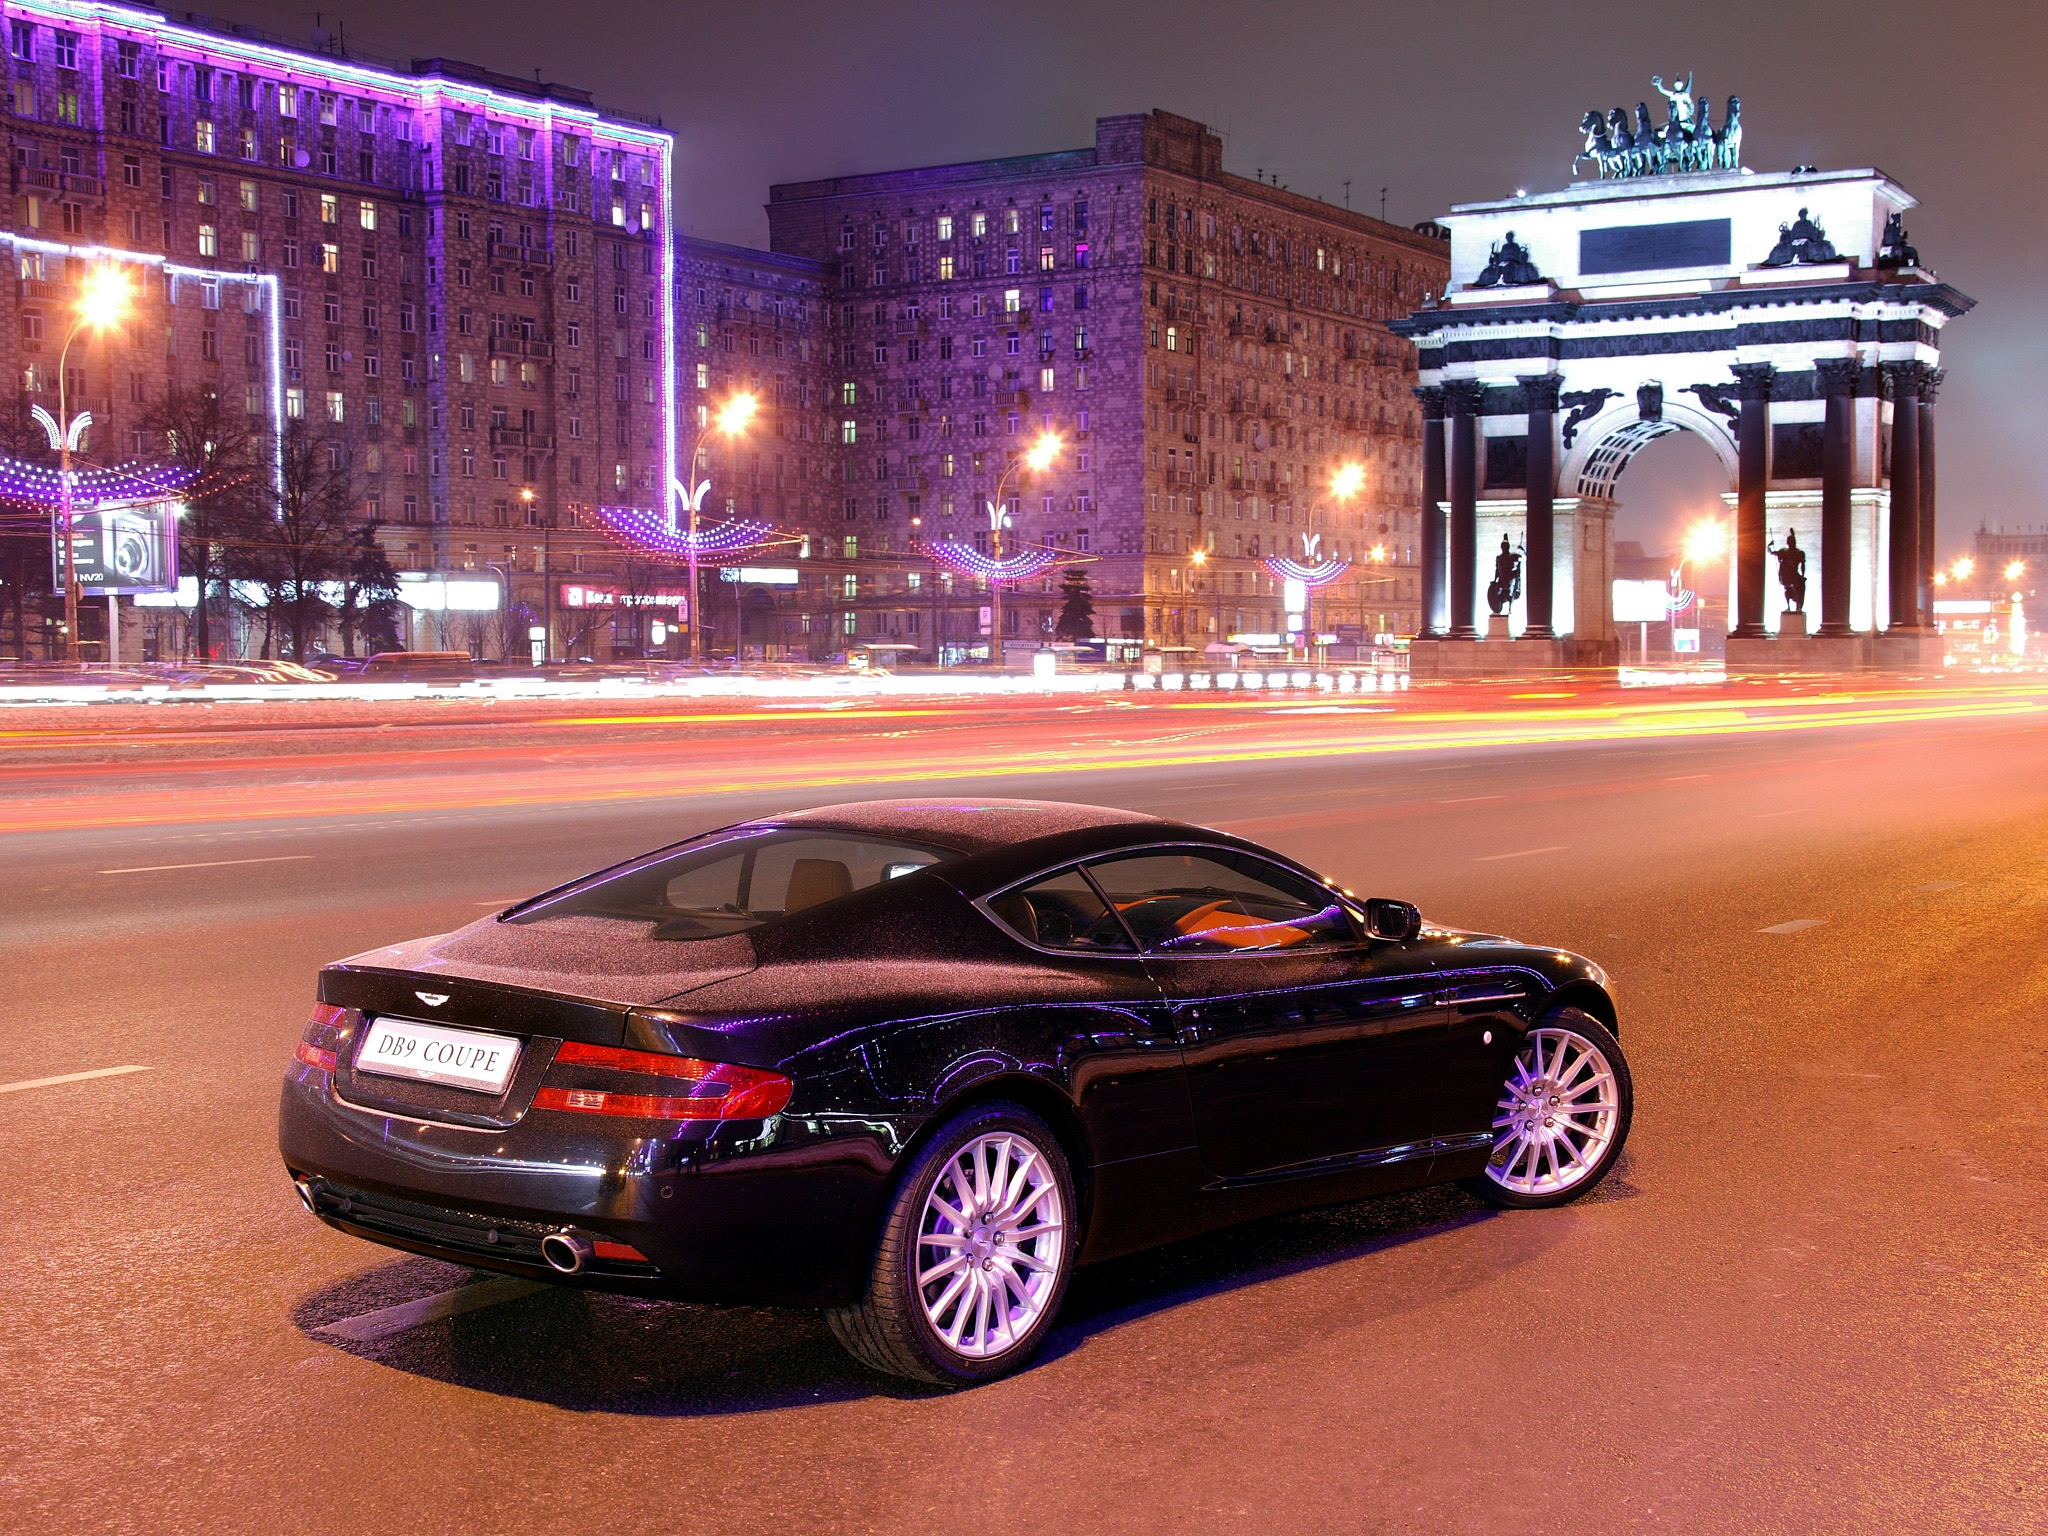 cars, black, auto, aston martin, city, building, lights, asphalt, side view, style, db9 2160p